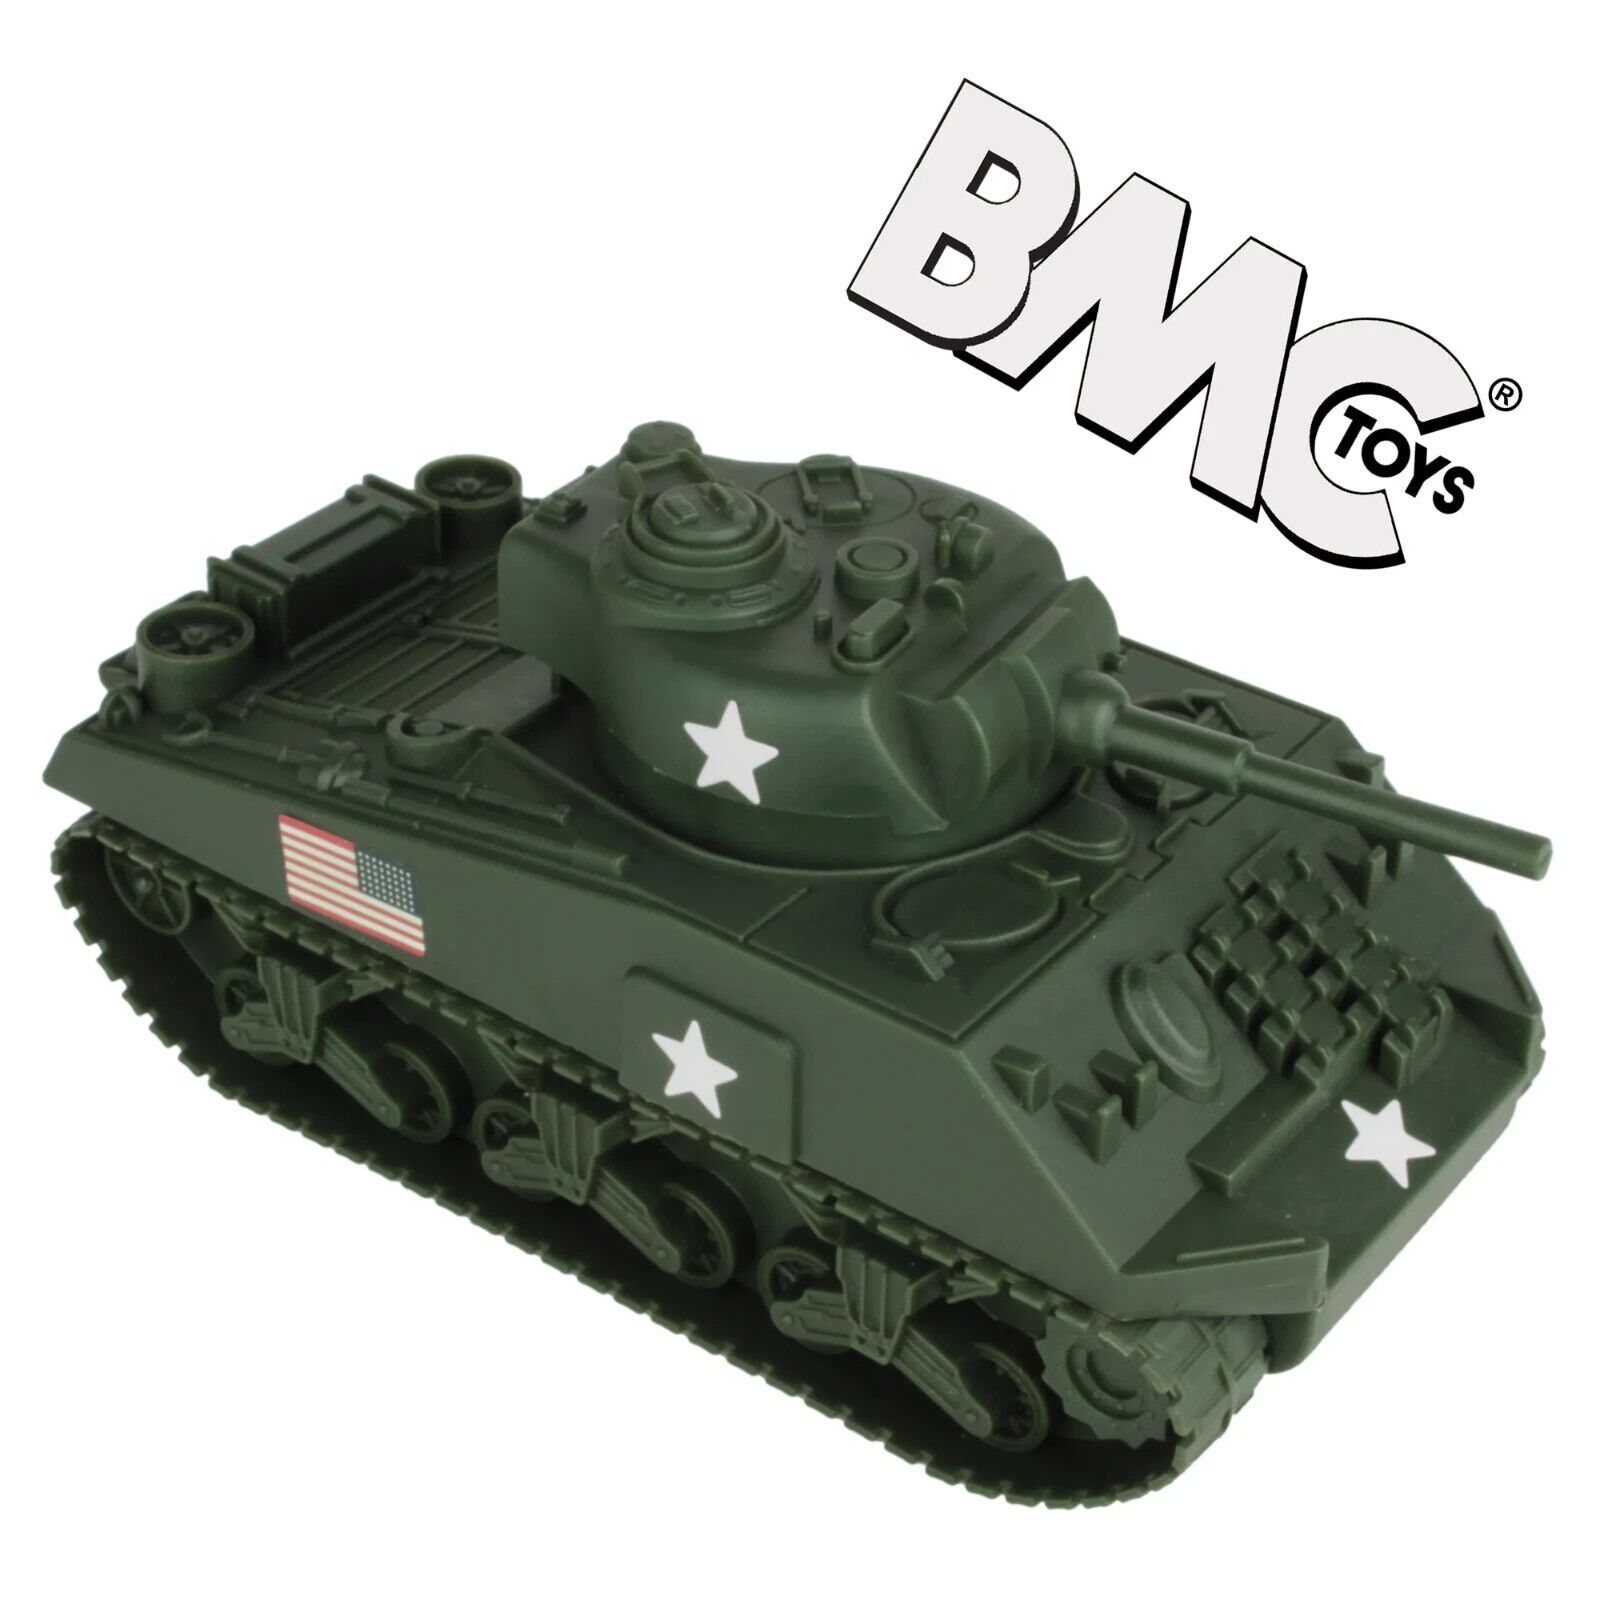 BMC WW2 Sherman M4 Tank Dark Green 1:32 Military Vehicle for Plastic Army Men